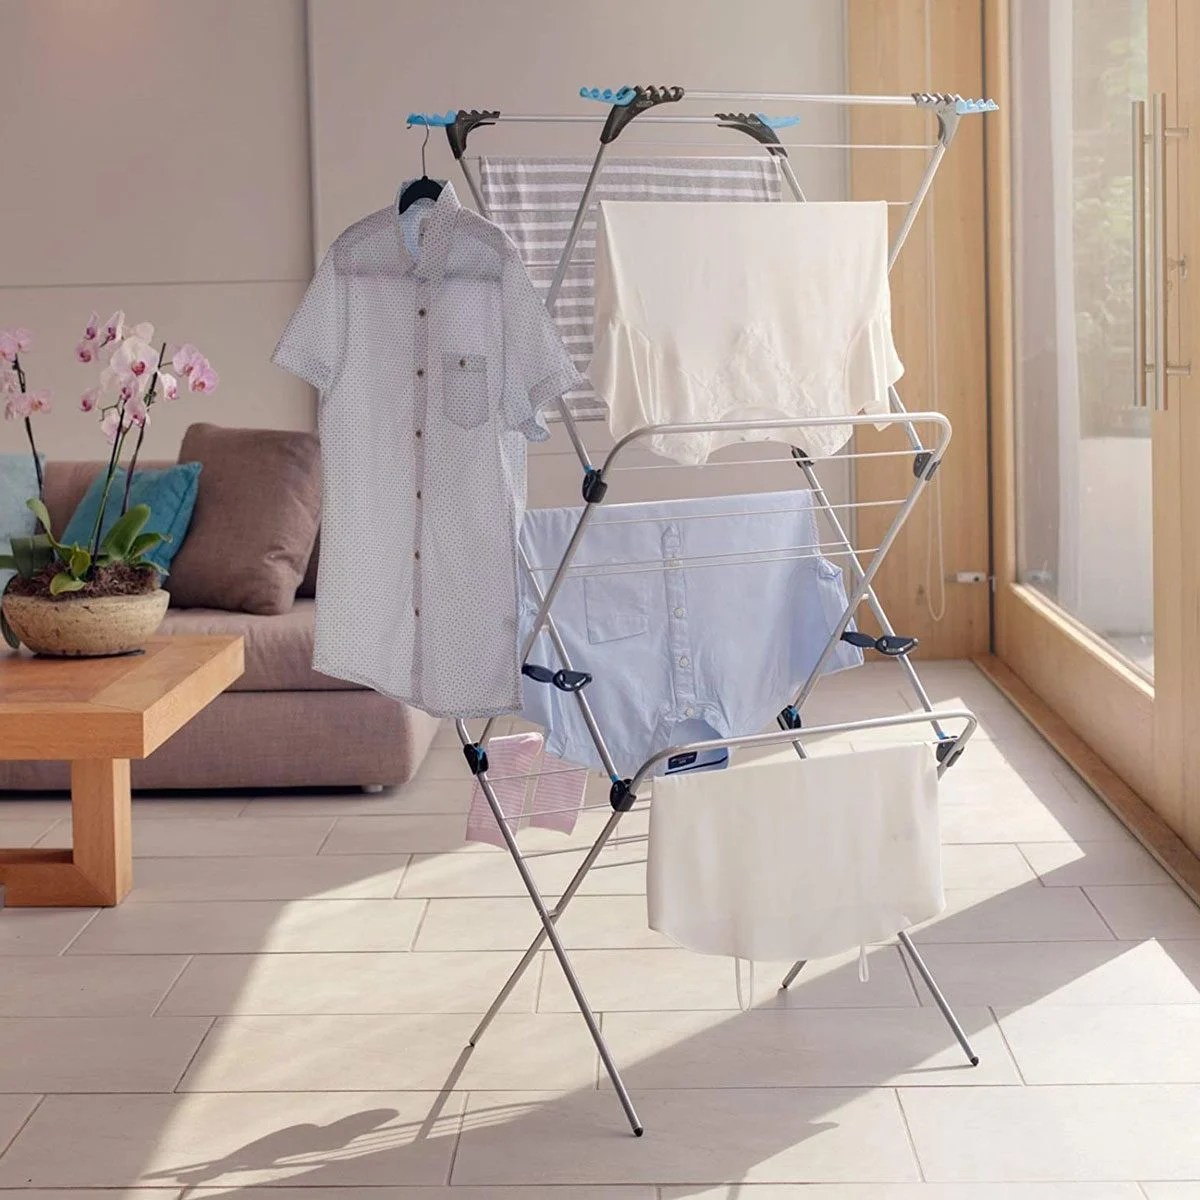 9 Best Hanging Racks for the Laundry Room The Family Handyman